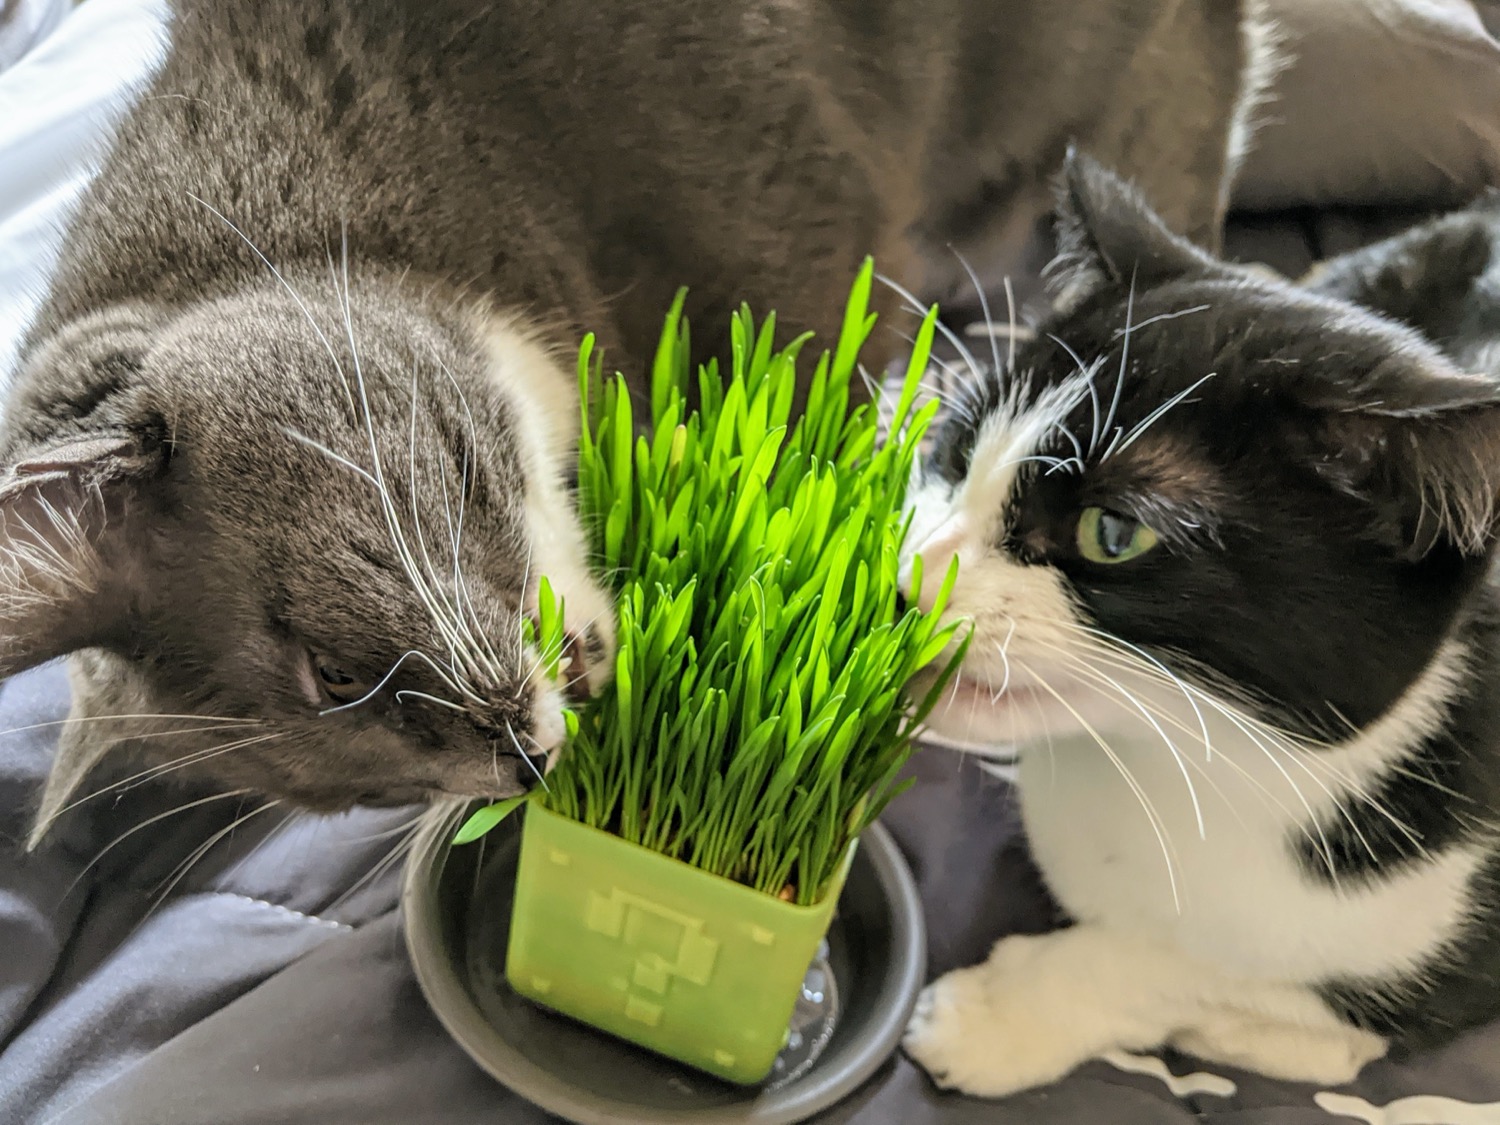 Kitties enjoying the grass